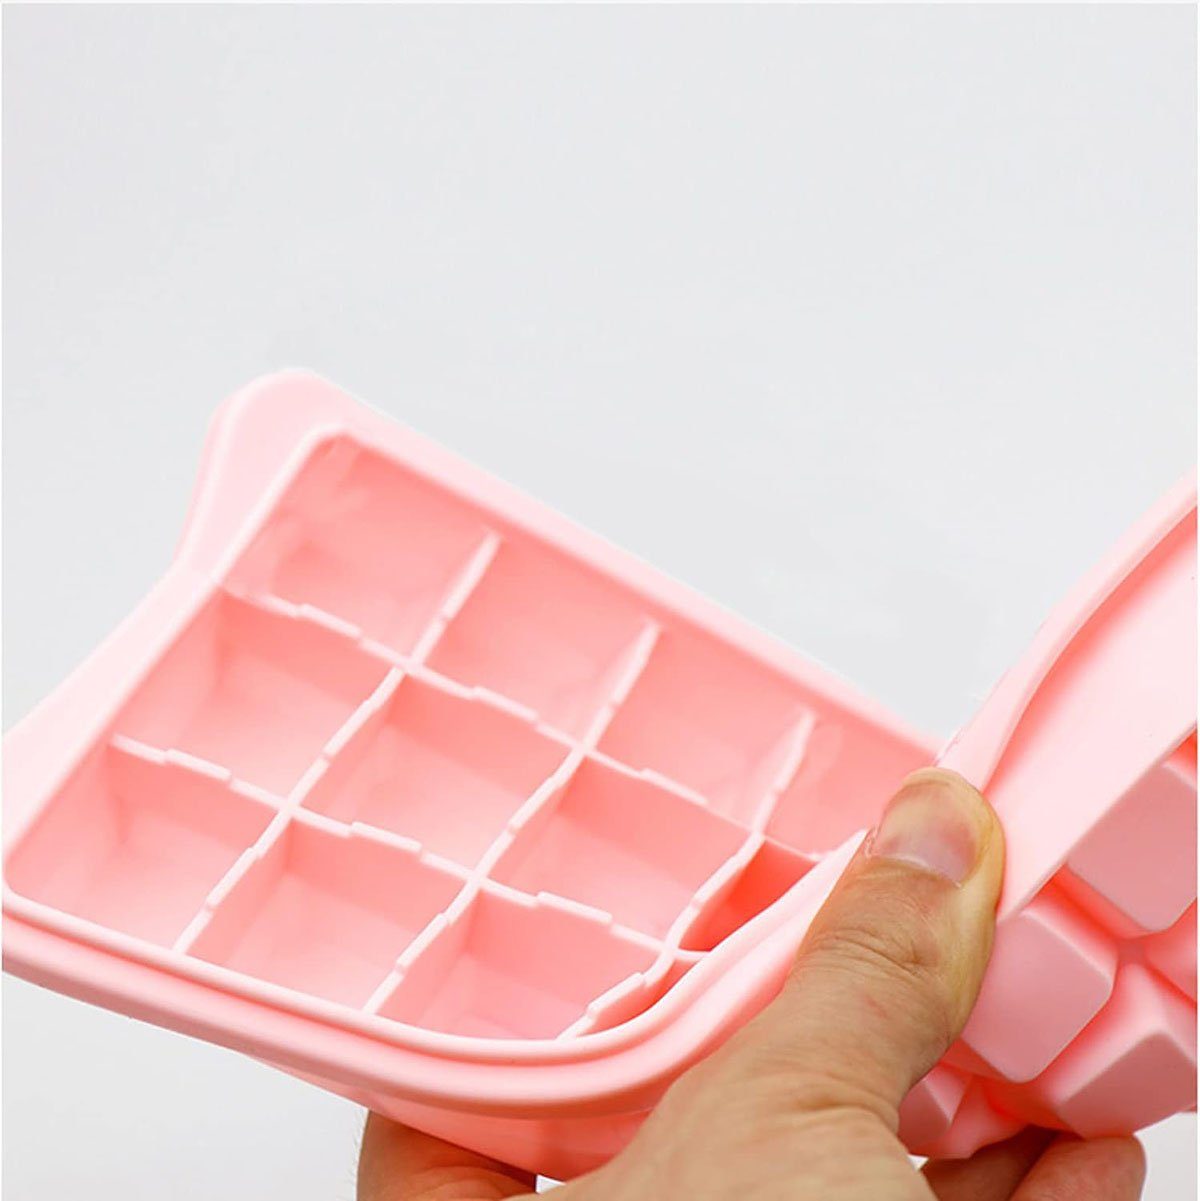 CTGtree Eismaschine Silikon 36 Haushalt Eiswürfelform rosa Gitter Eisbox Fach 36